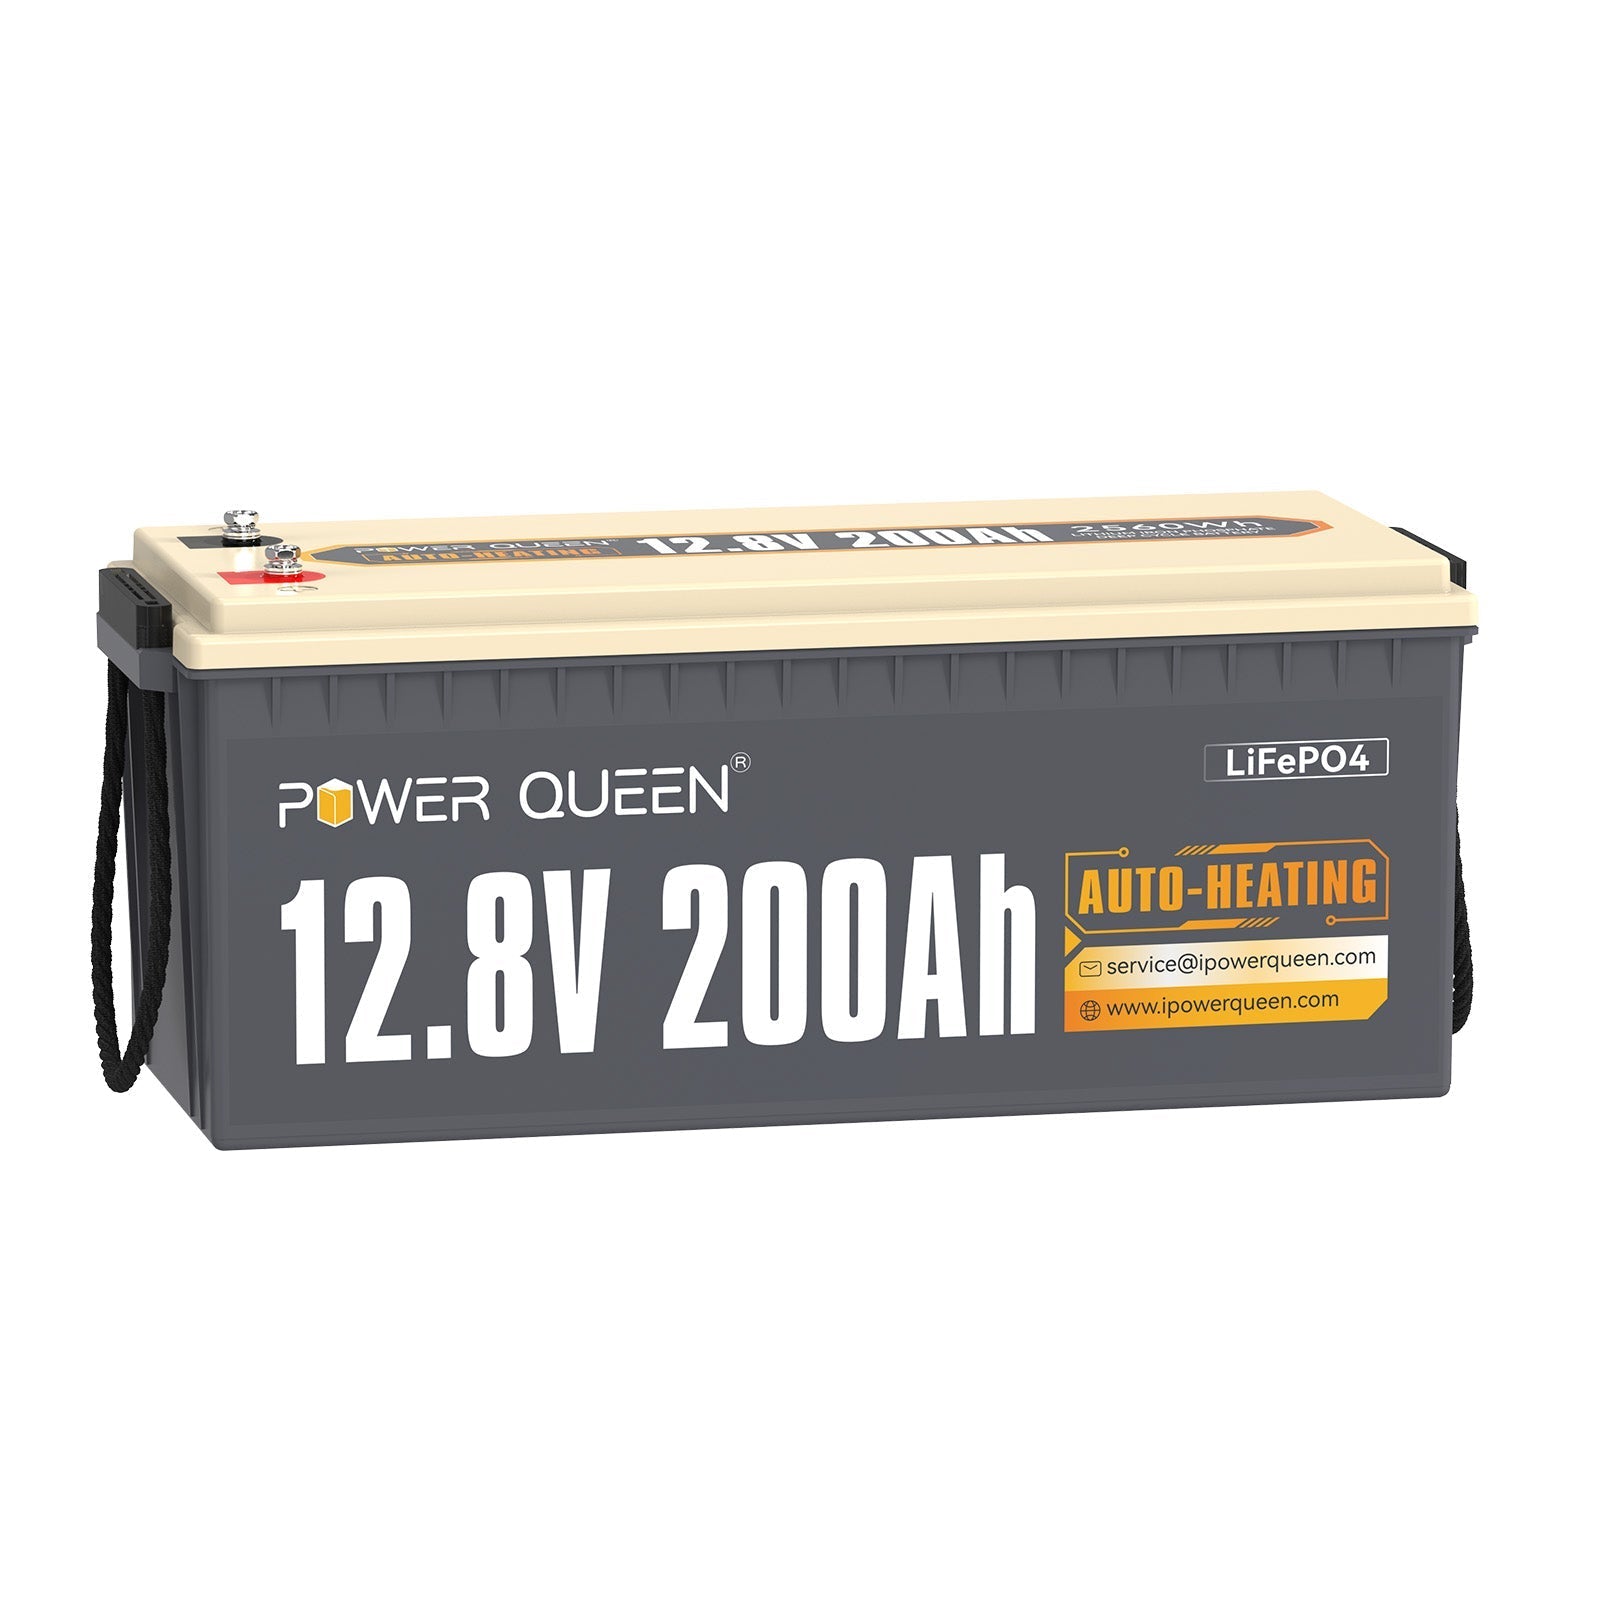 Come nuovo: batteria LiFePO4 autoriscaldante Power Queen 12,8 V 200 Ah, BMS 100 A integrato